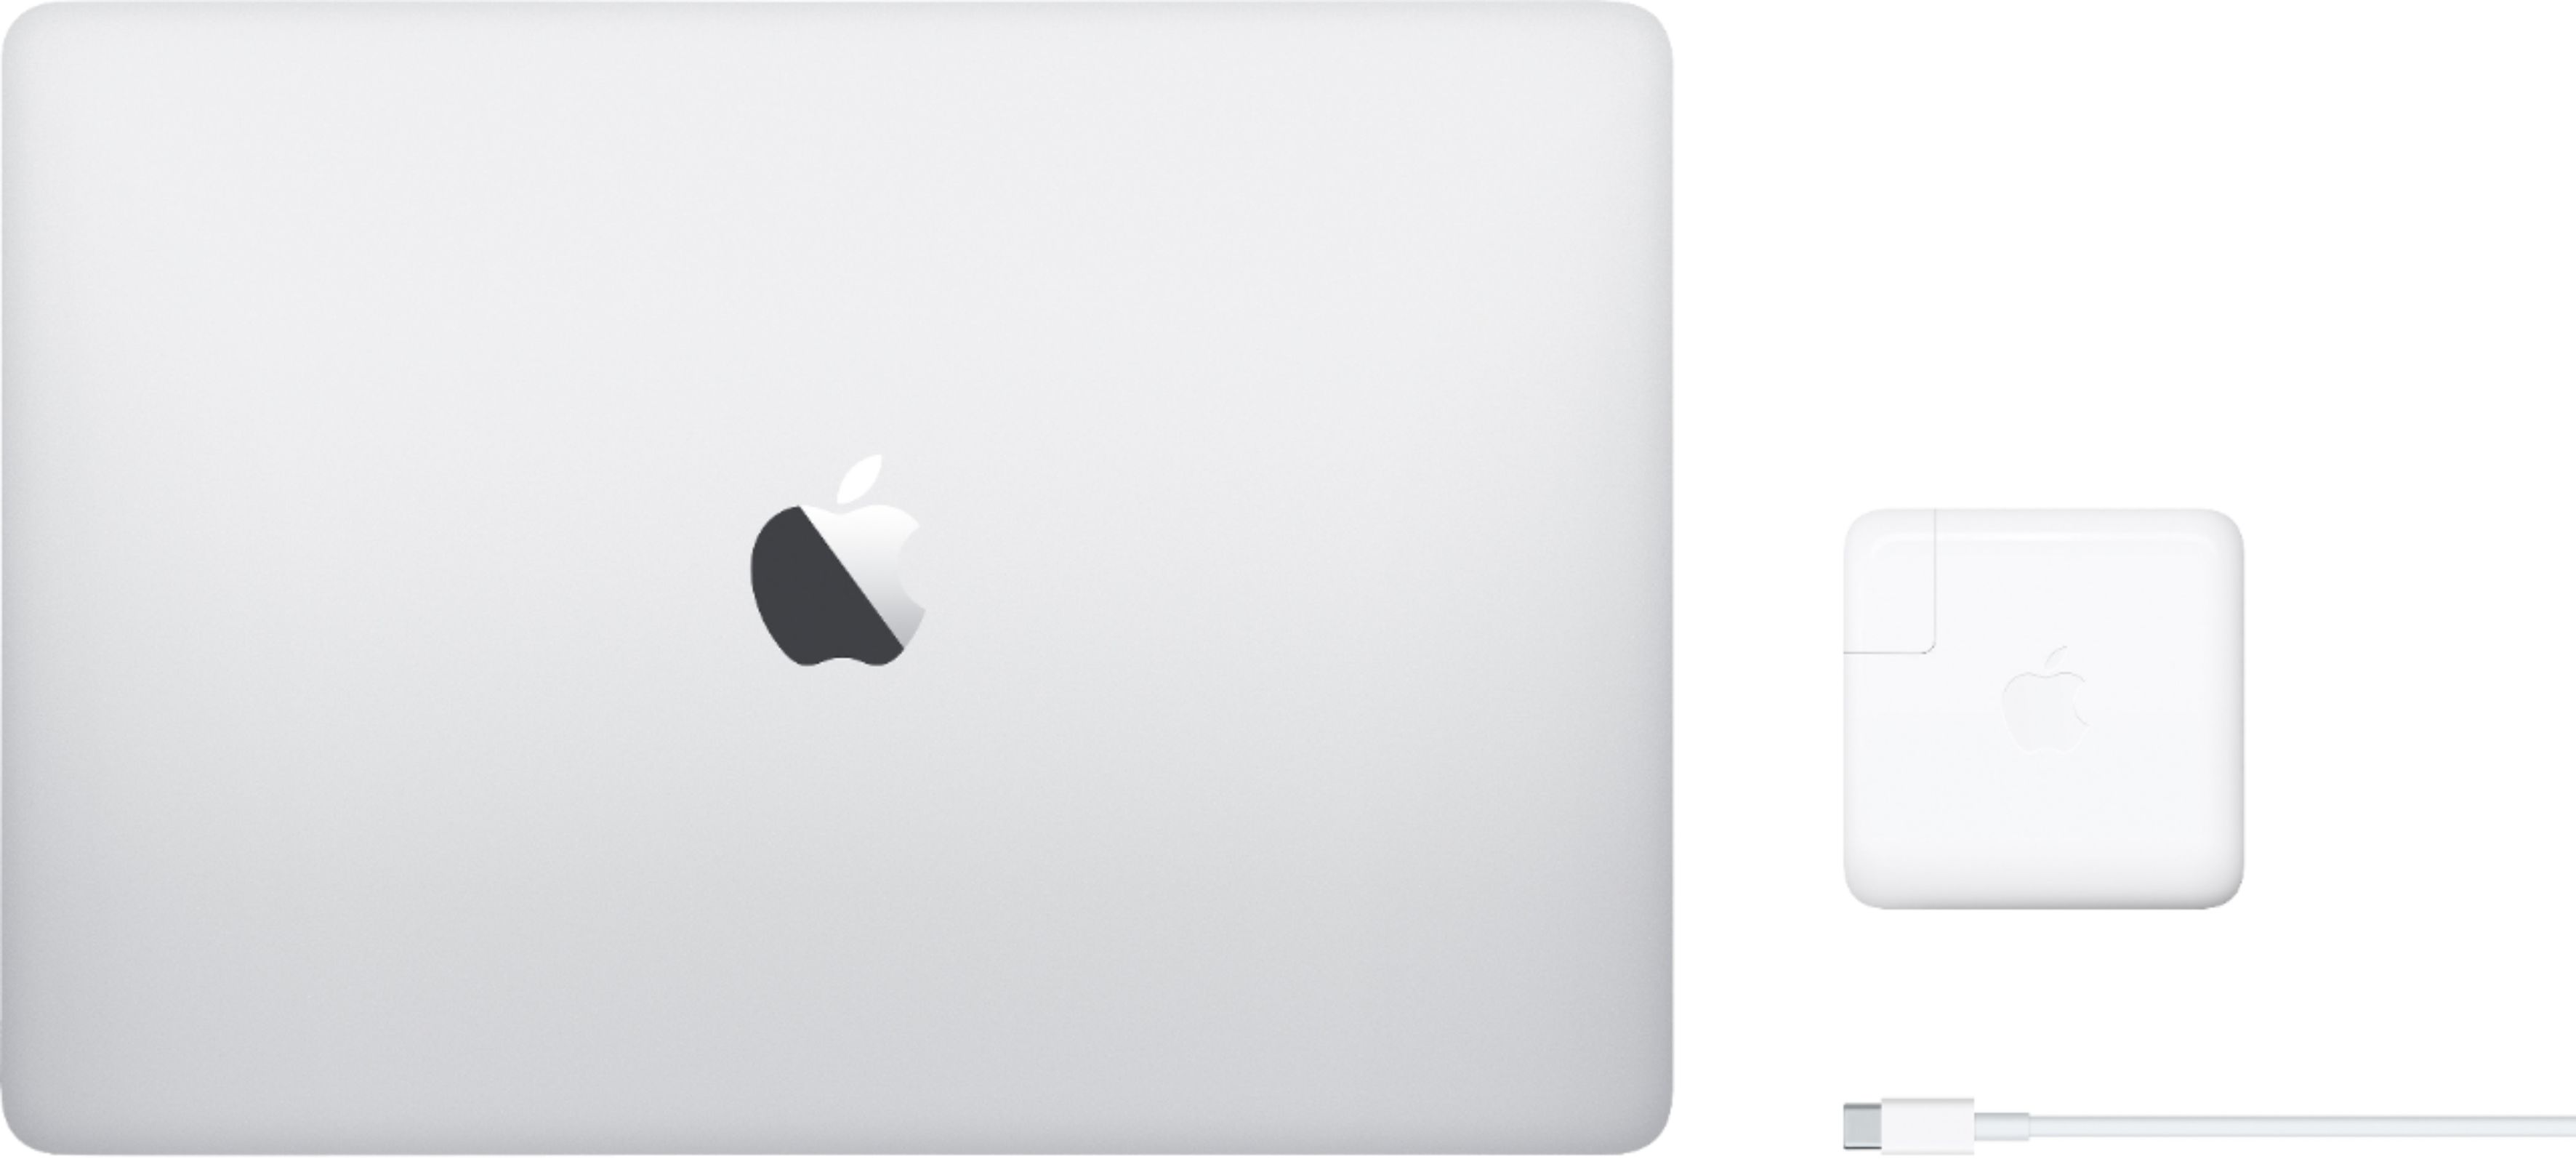 apple macbook pro 4gb review